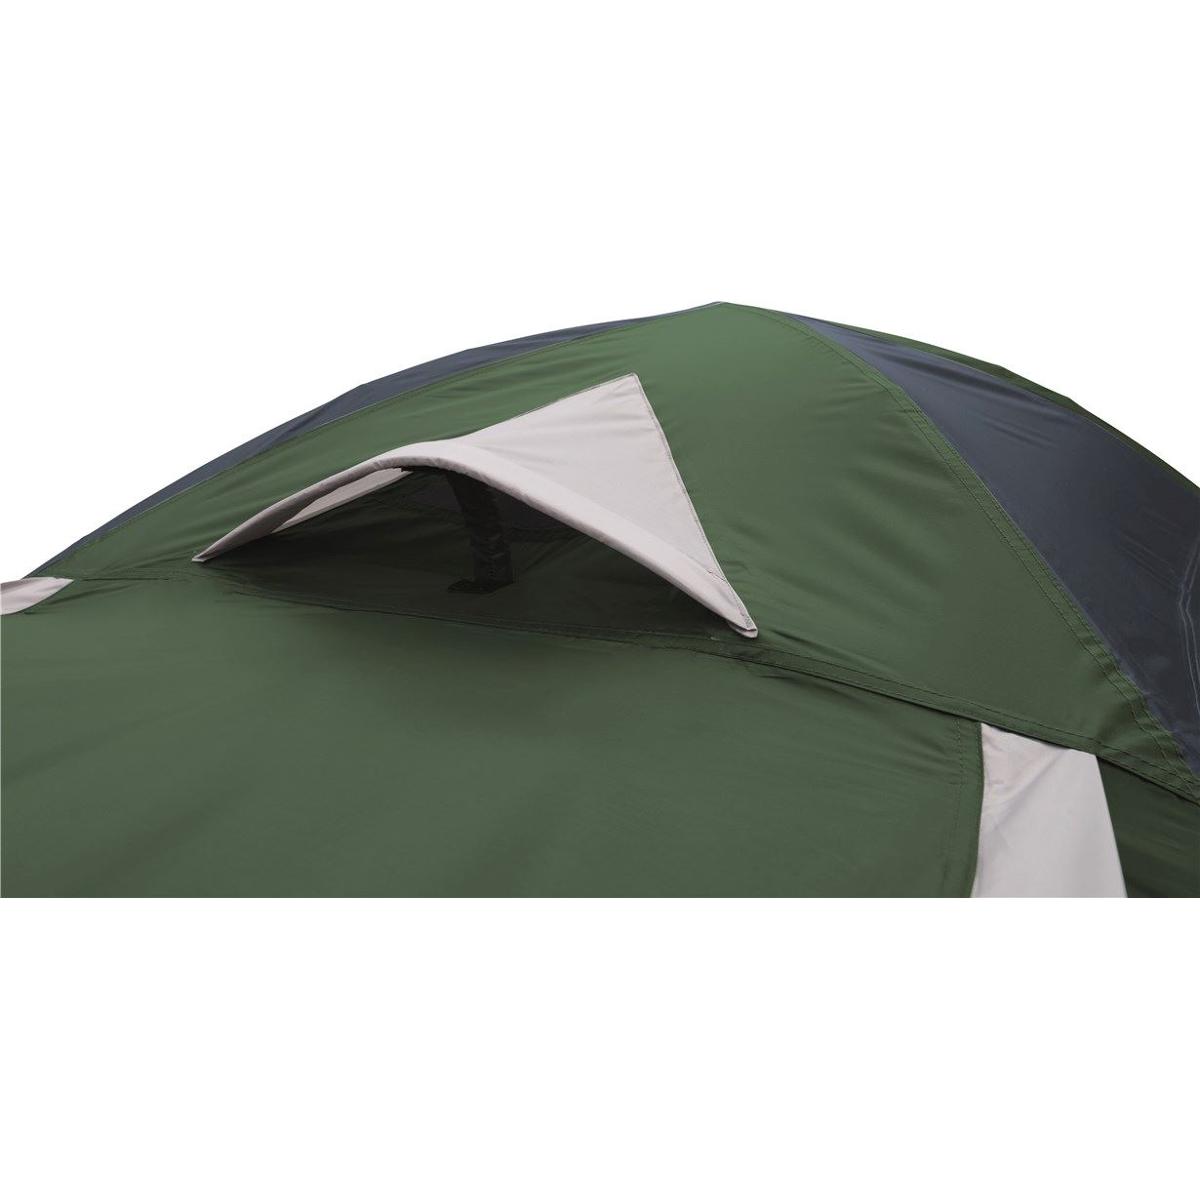 220x230cm, grün/grau Garda 300 3-Personen, bei Wagner Camping Camp Campingzubehör Kuppelzelt, Easy